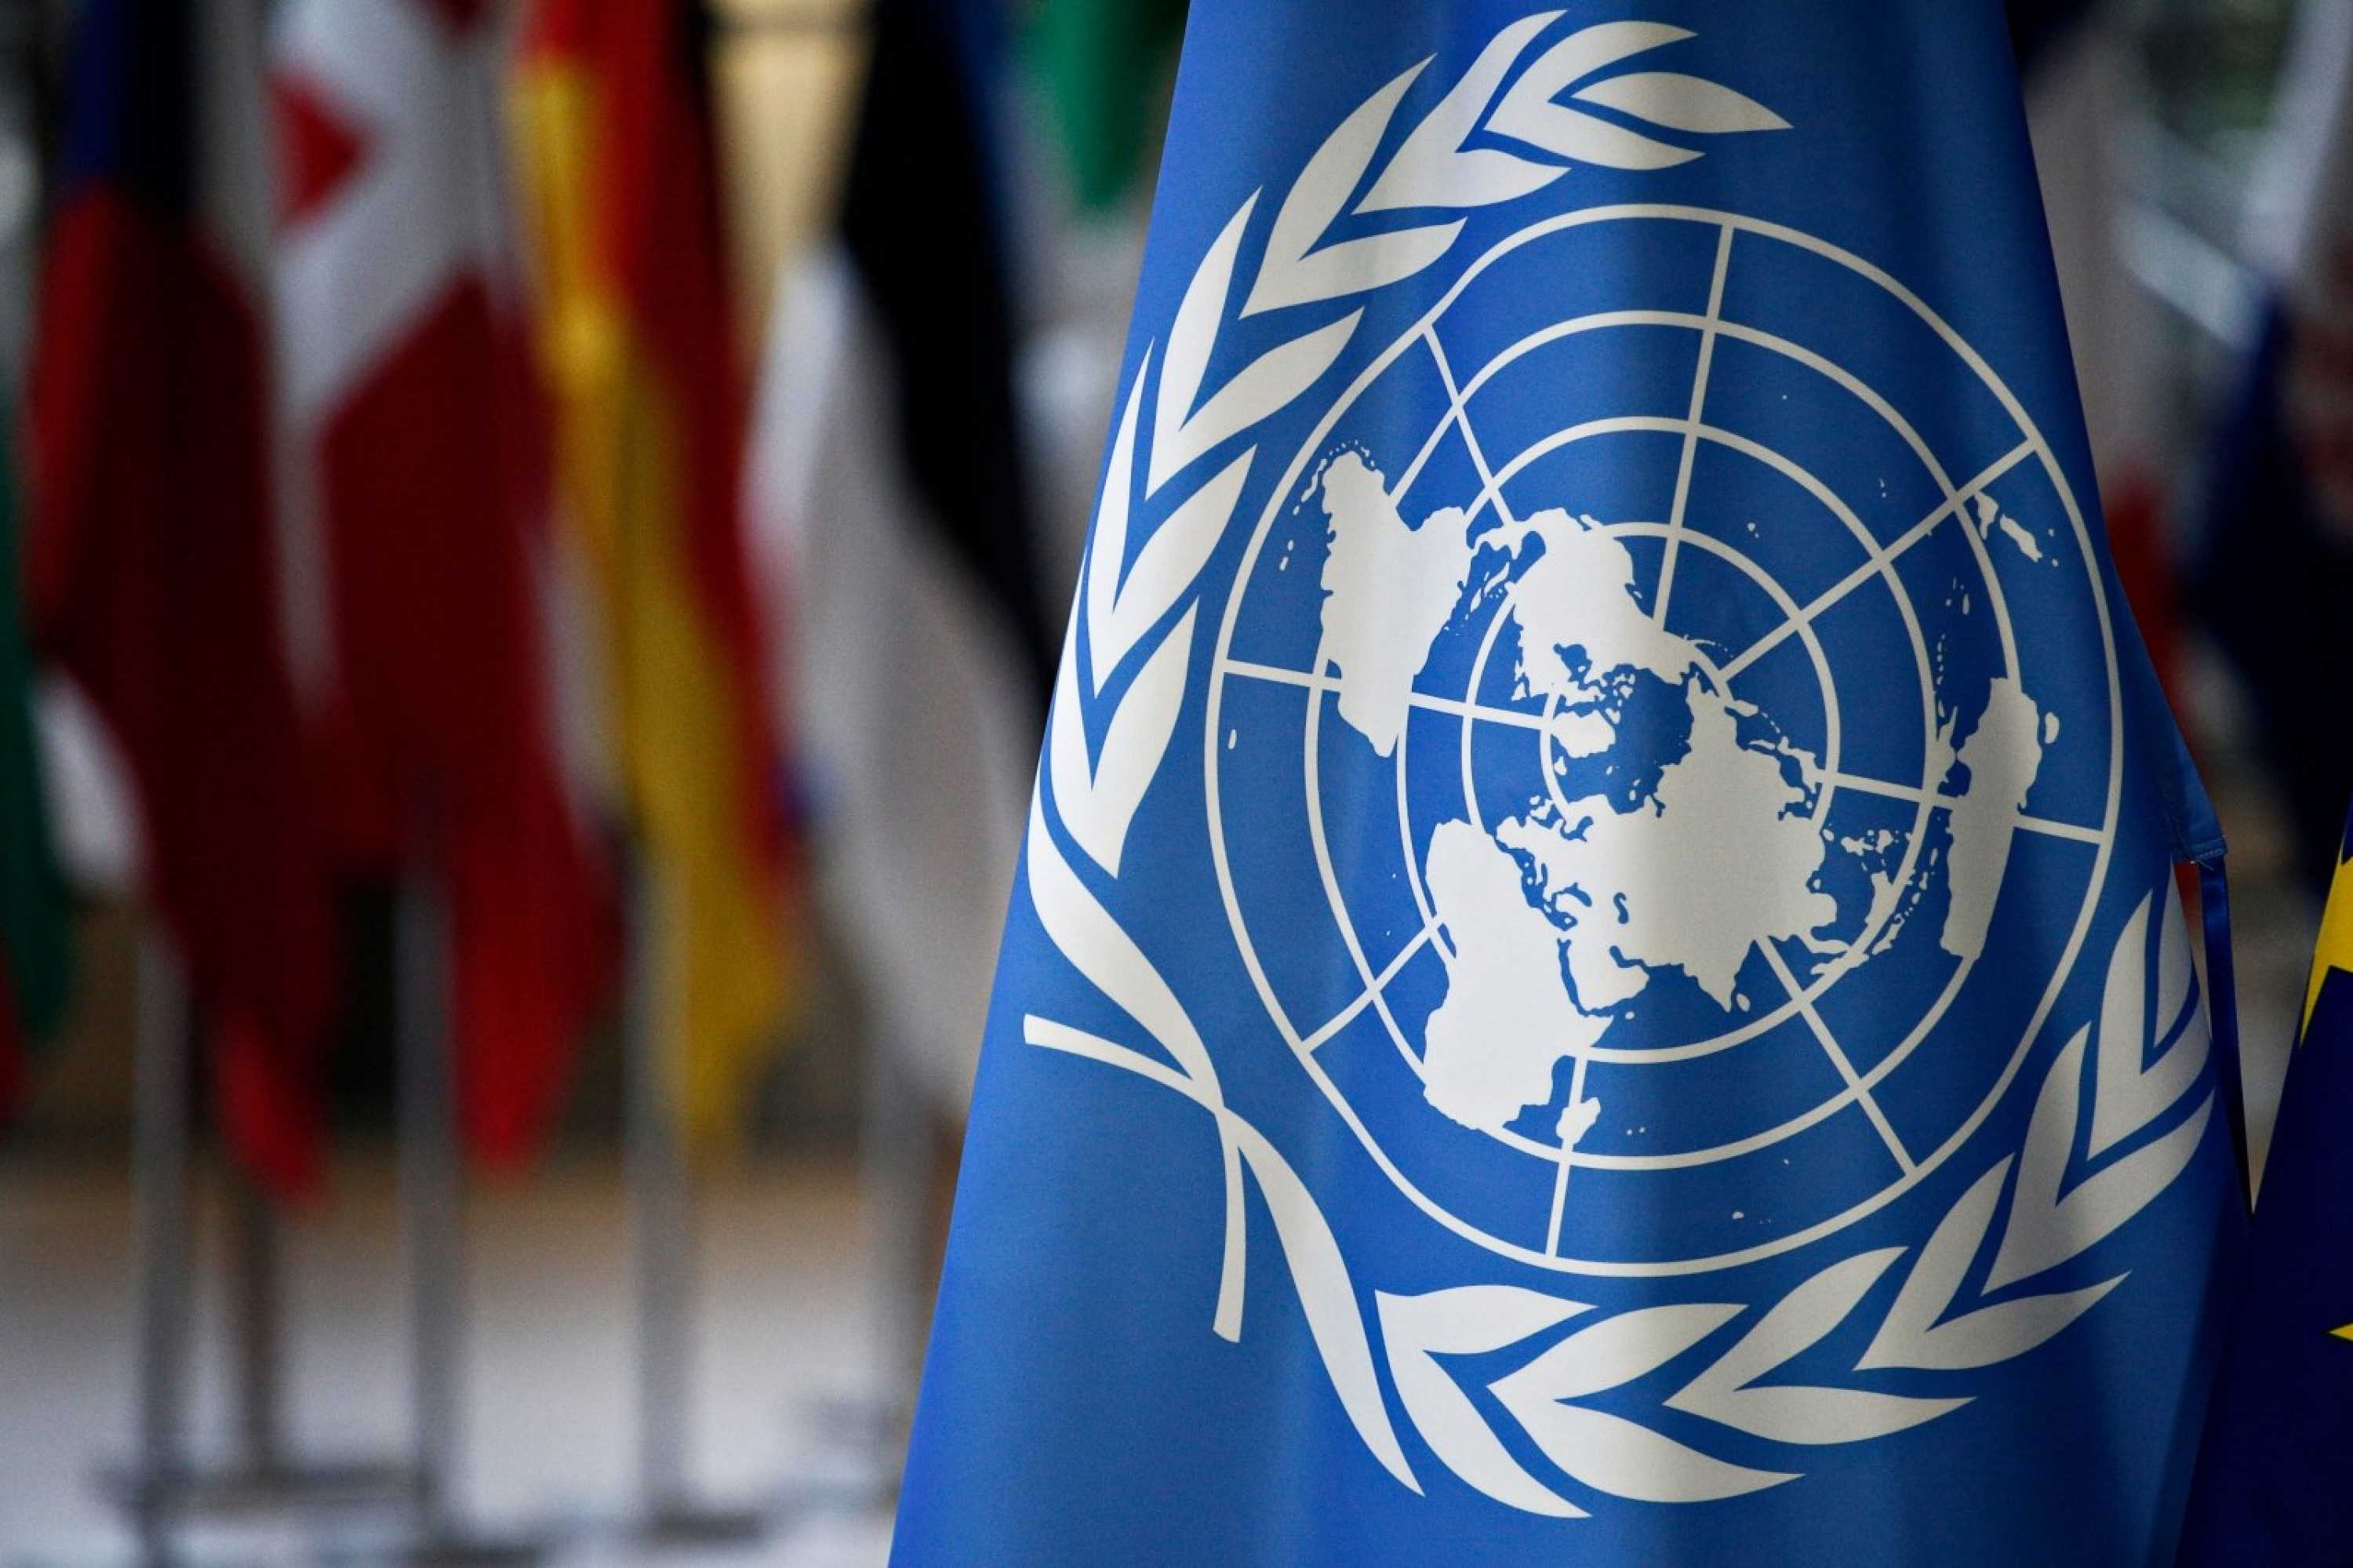 3314 оон. Организация Объединенных наций (ООН). Генеральная Ассамблея ООН флаг. Международные организации ООН. Совет безопасности ООН флаг.